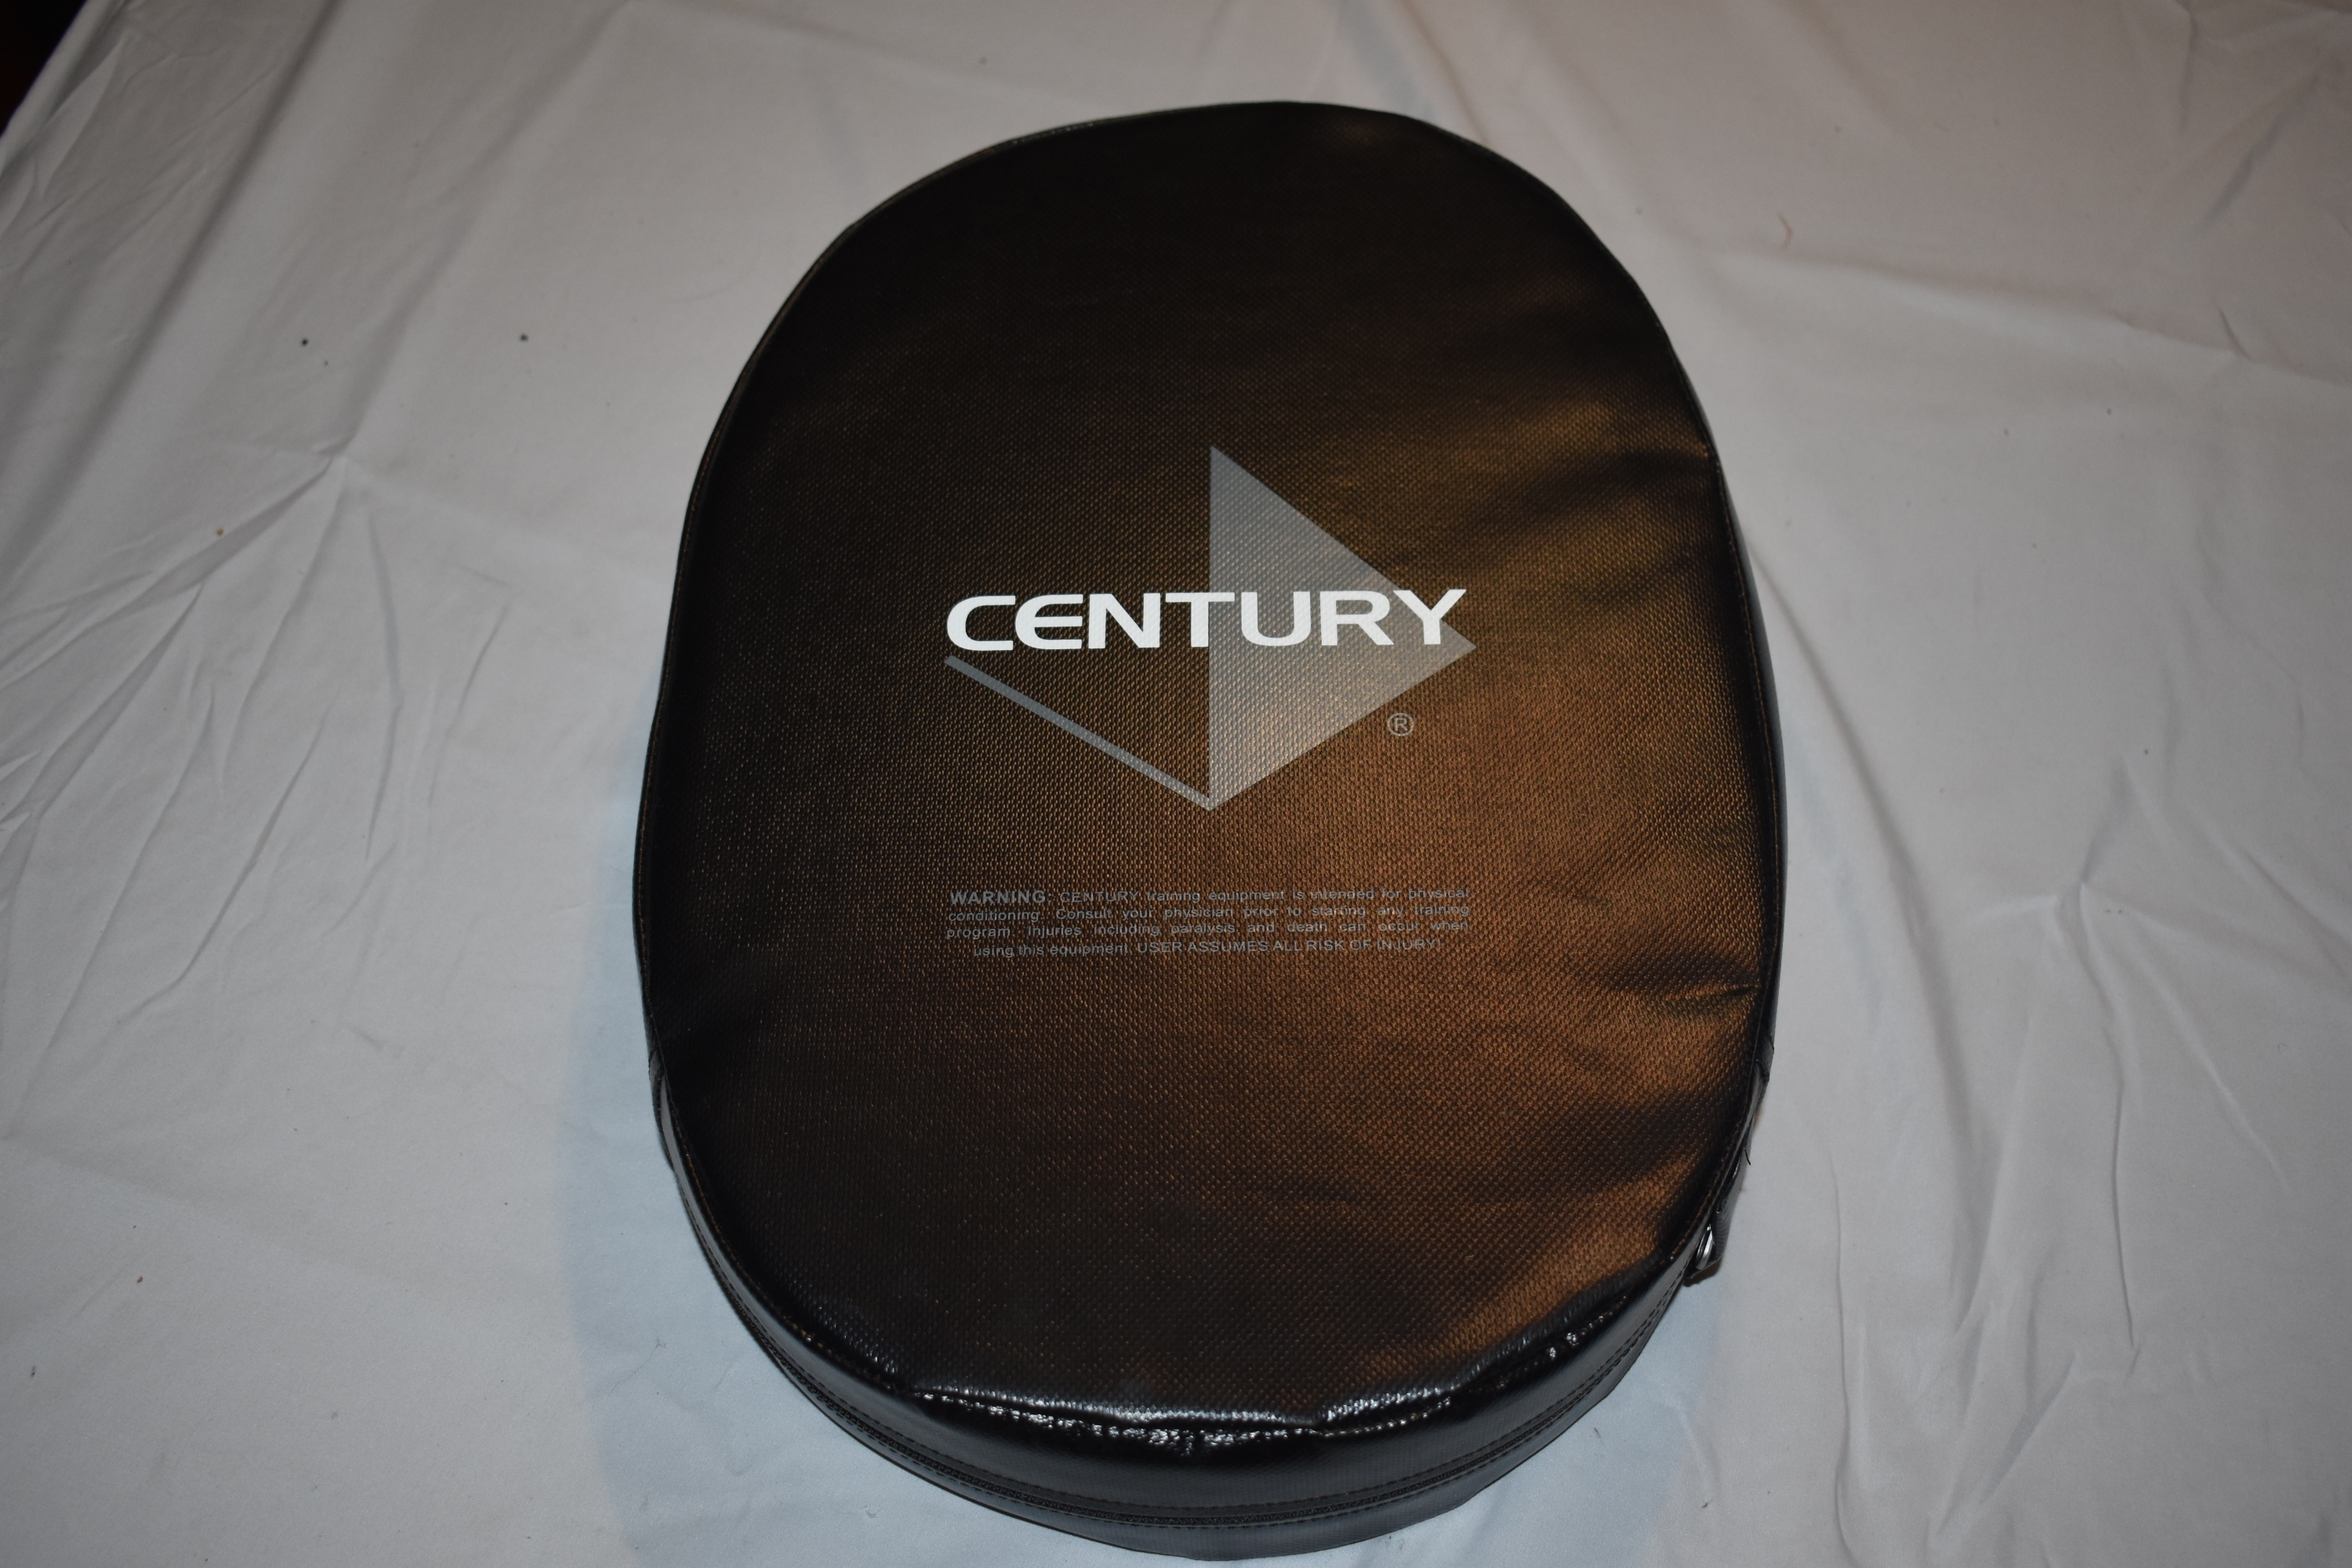 Century MMA/Training Handheld Oval Block/Kick Pad, Black - New Condition!